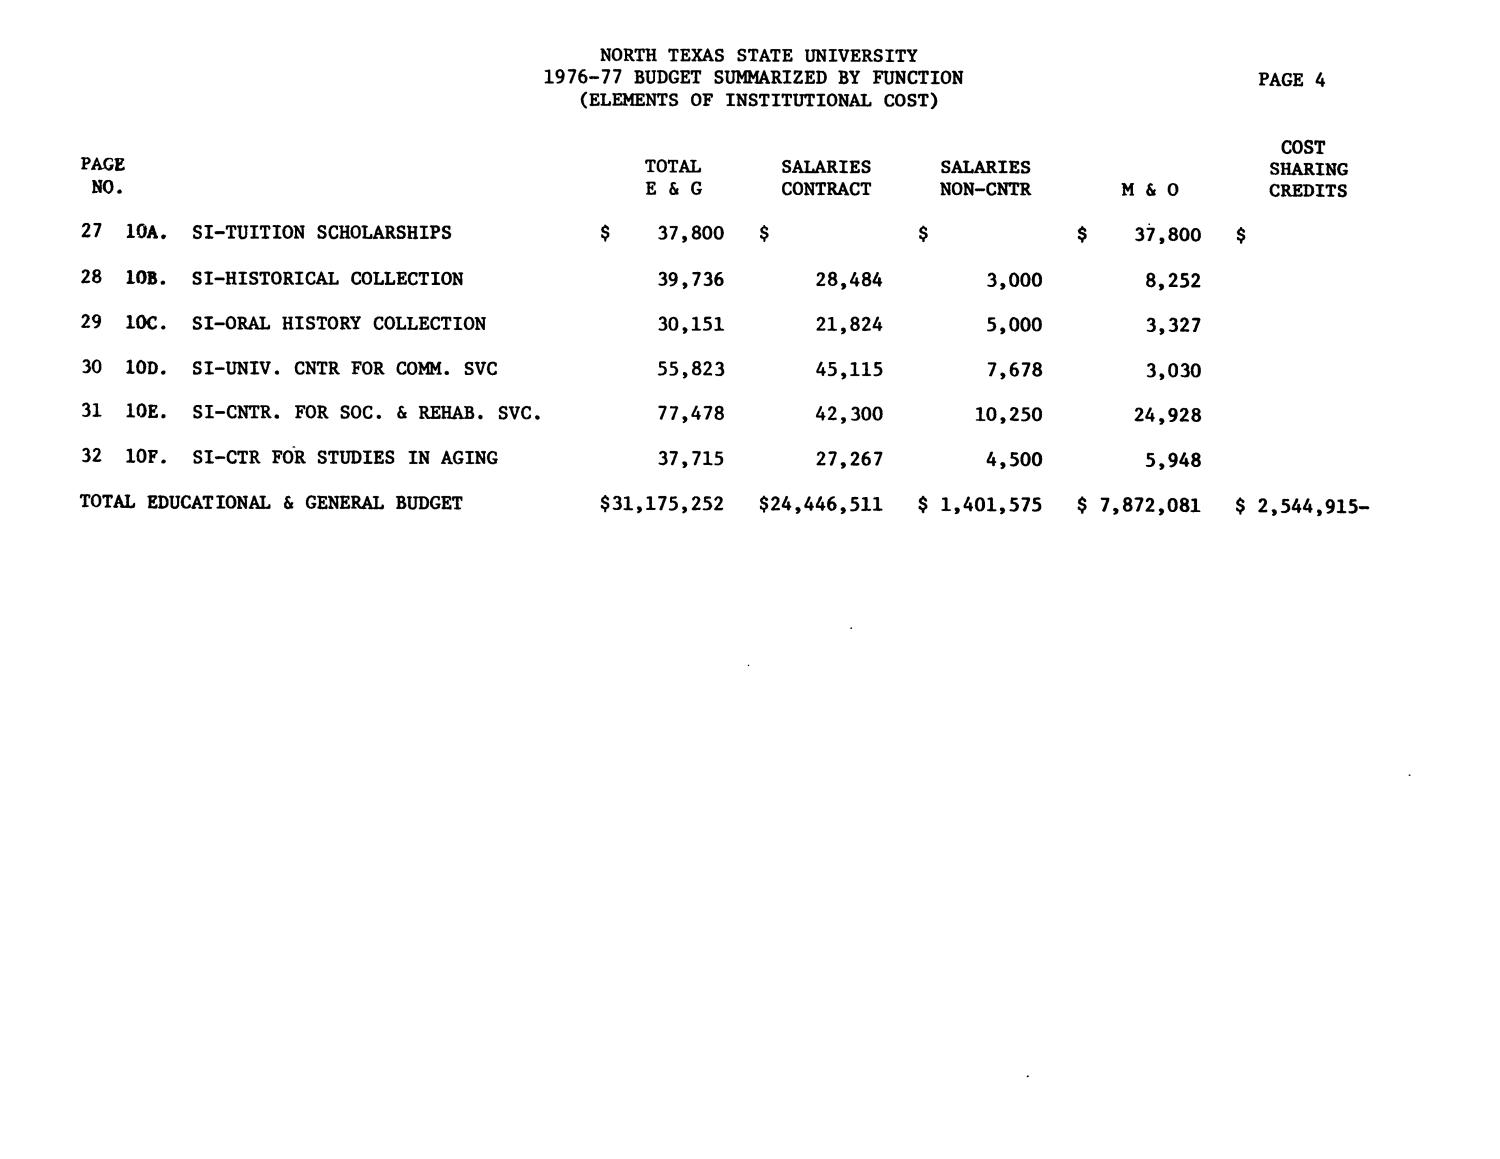 North Texas State University Budget: 1976-1977
                                                
                                                    4
                                                